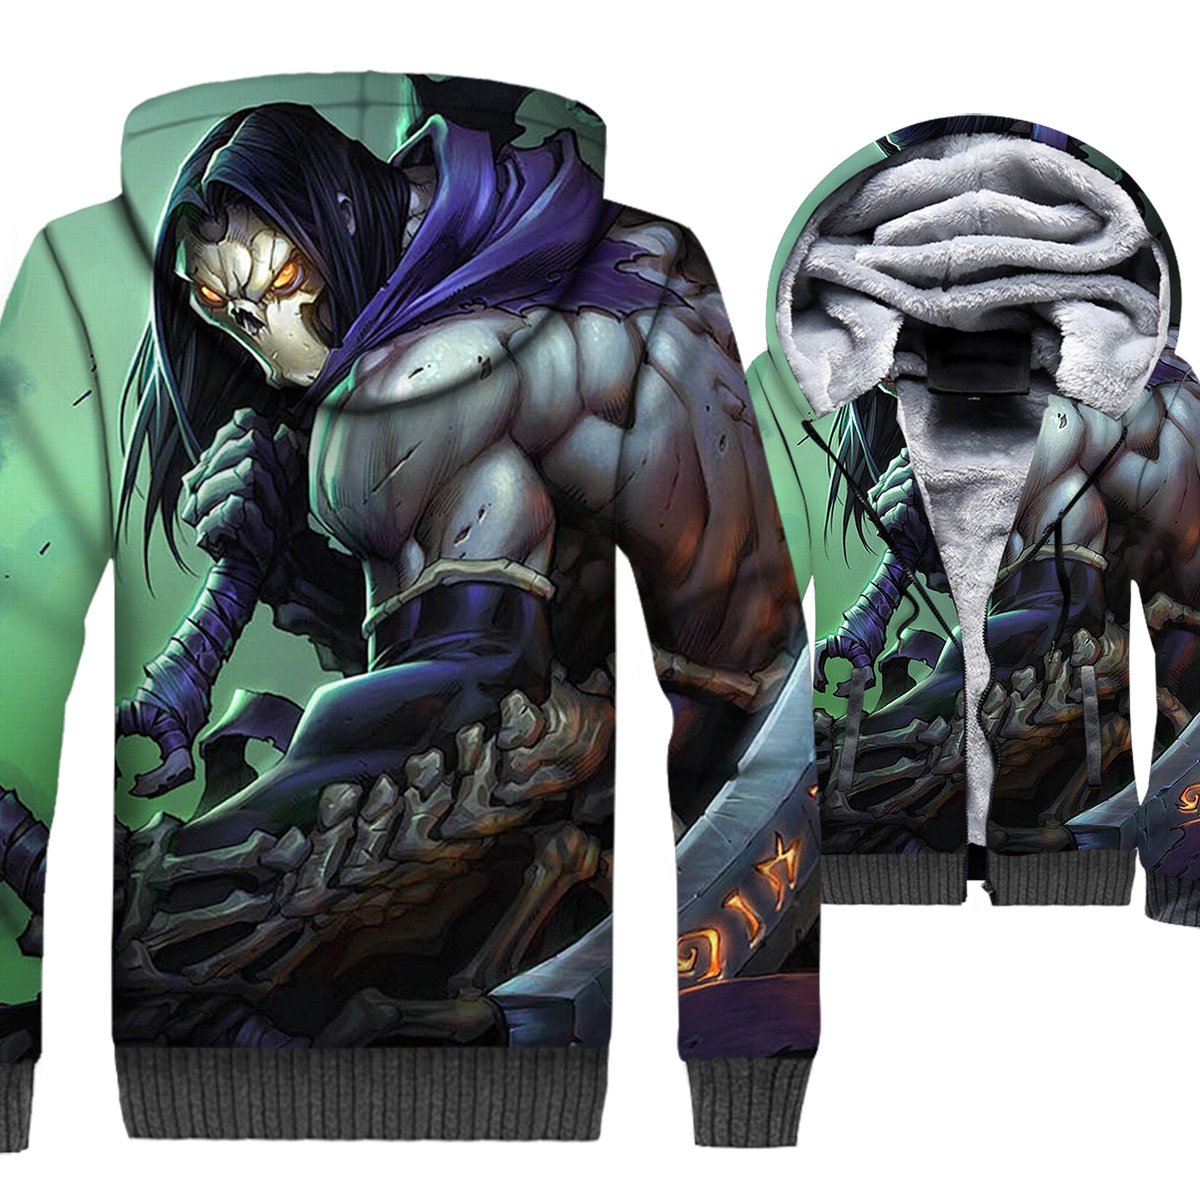 Darksiders Jackets - Darksiders Game Series Death The kinslayer Super Cool 3D Fleece Jacket